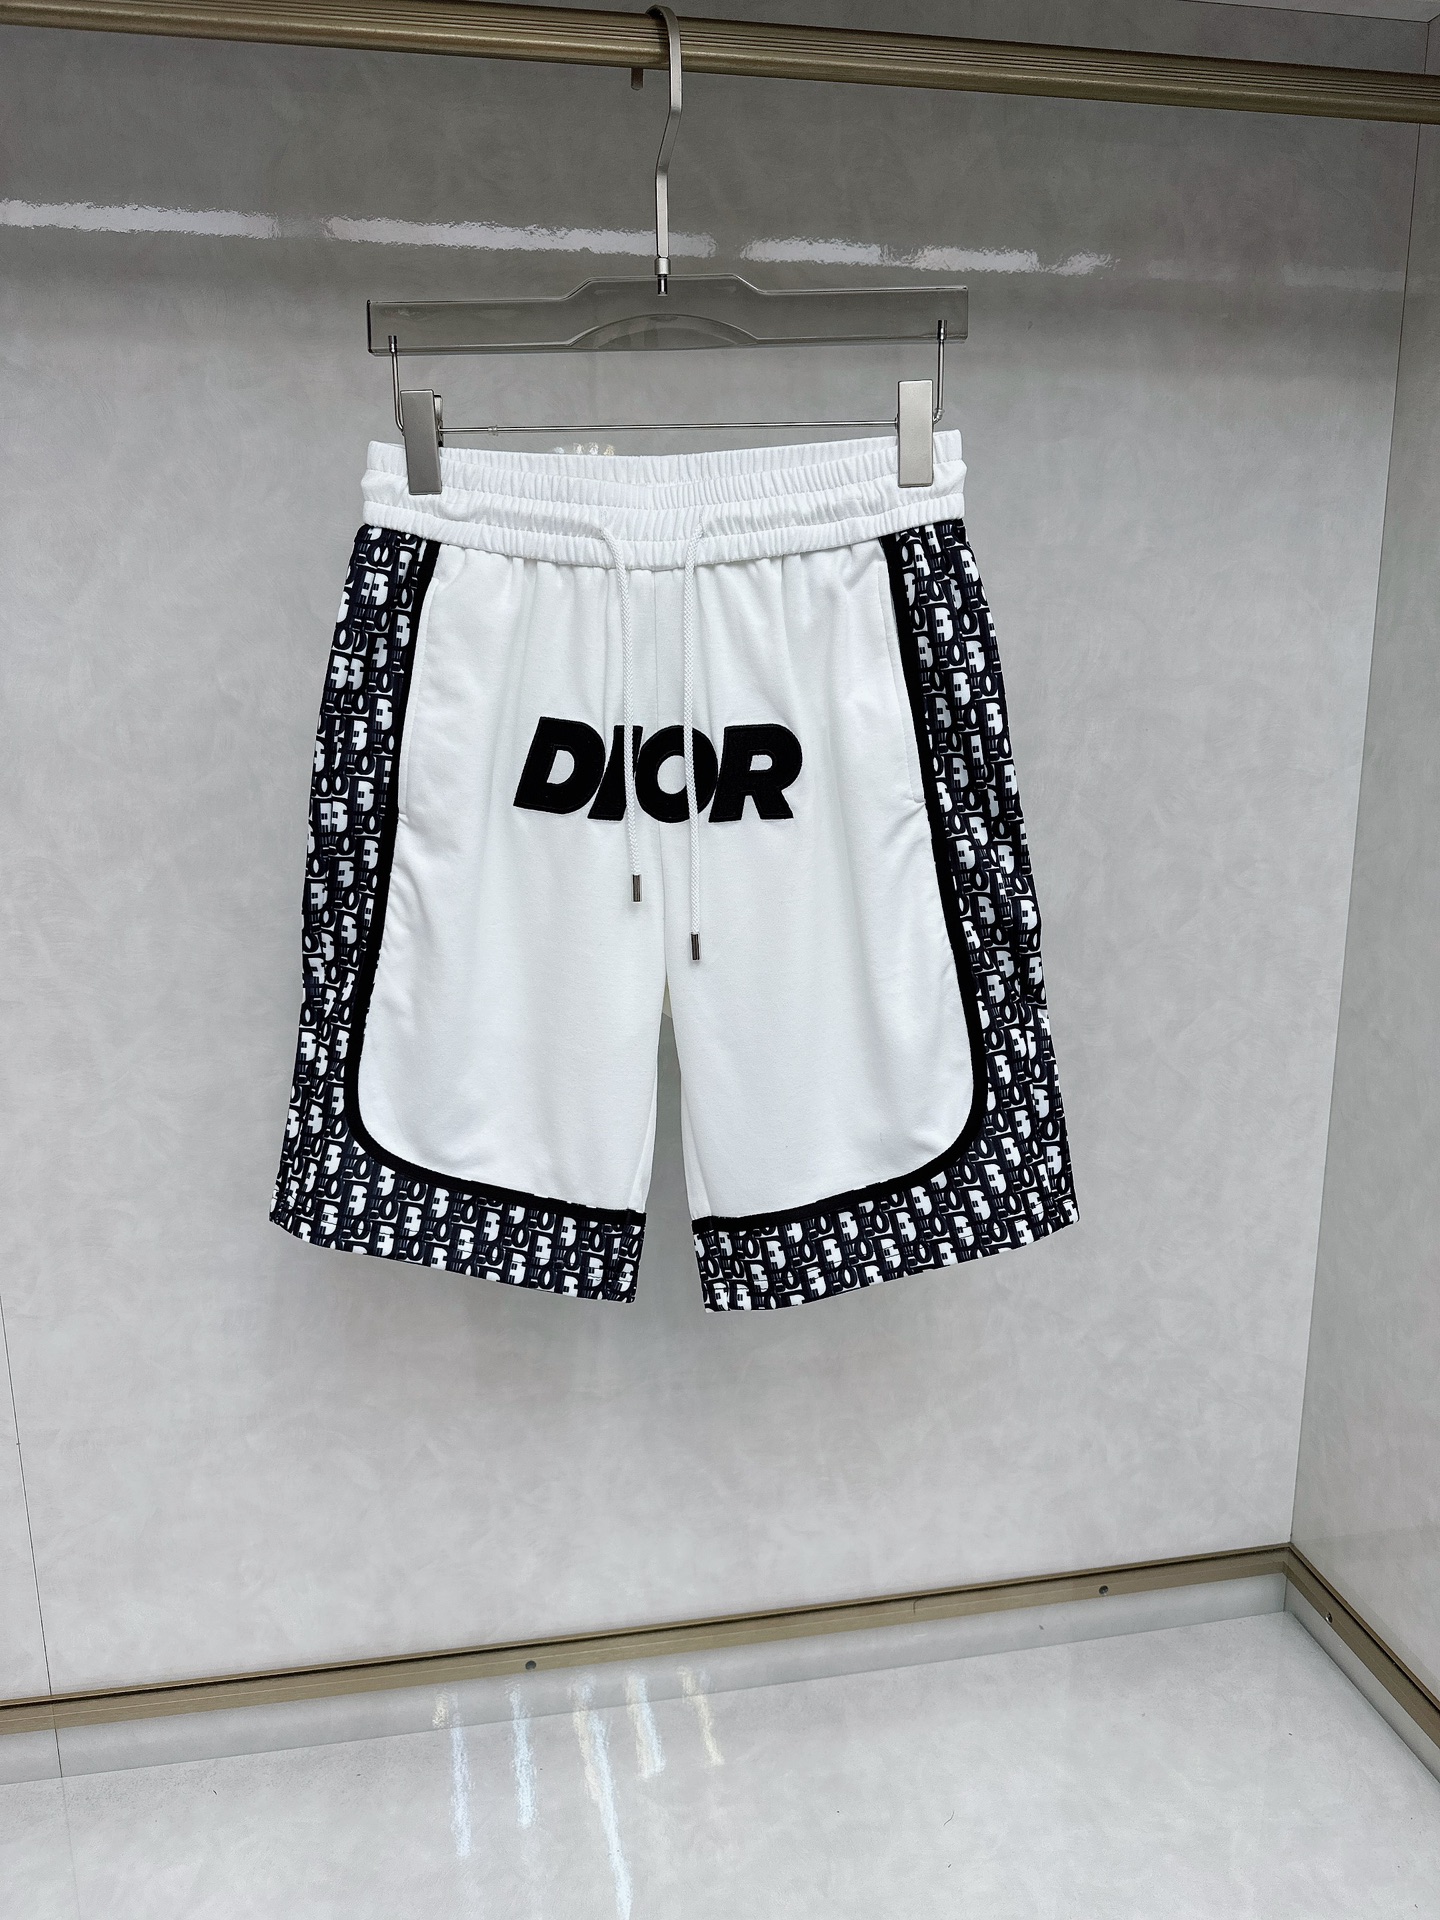 Dior Good
 Clothing Shorts Men Summer Collection Casual